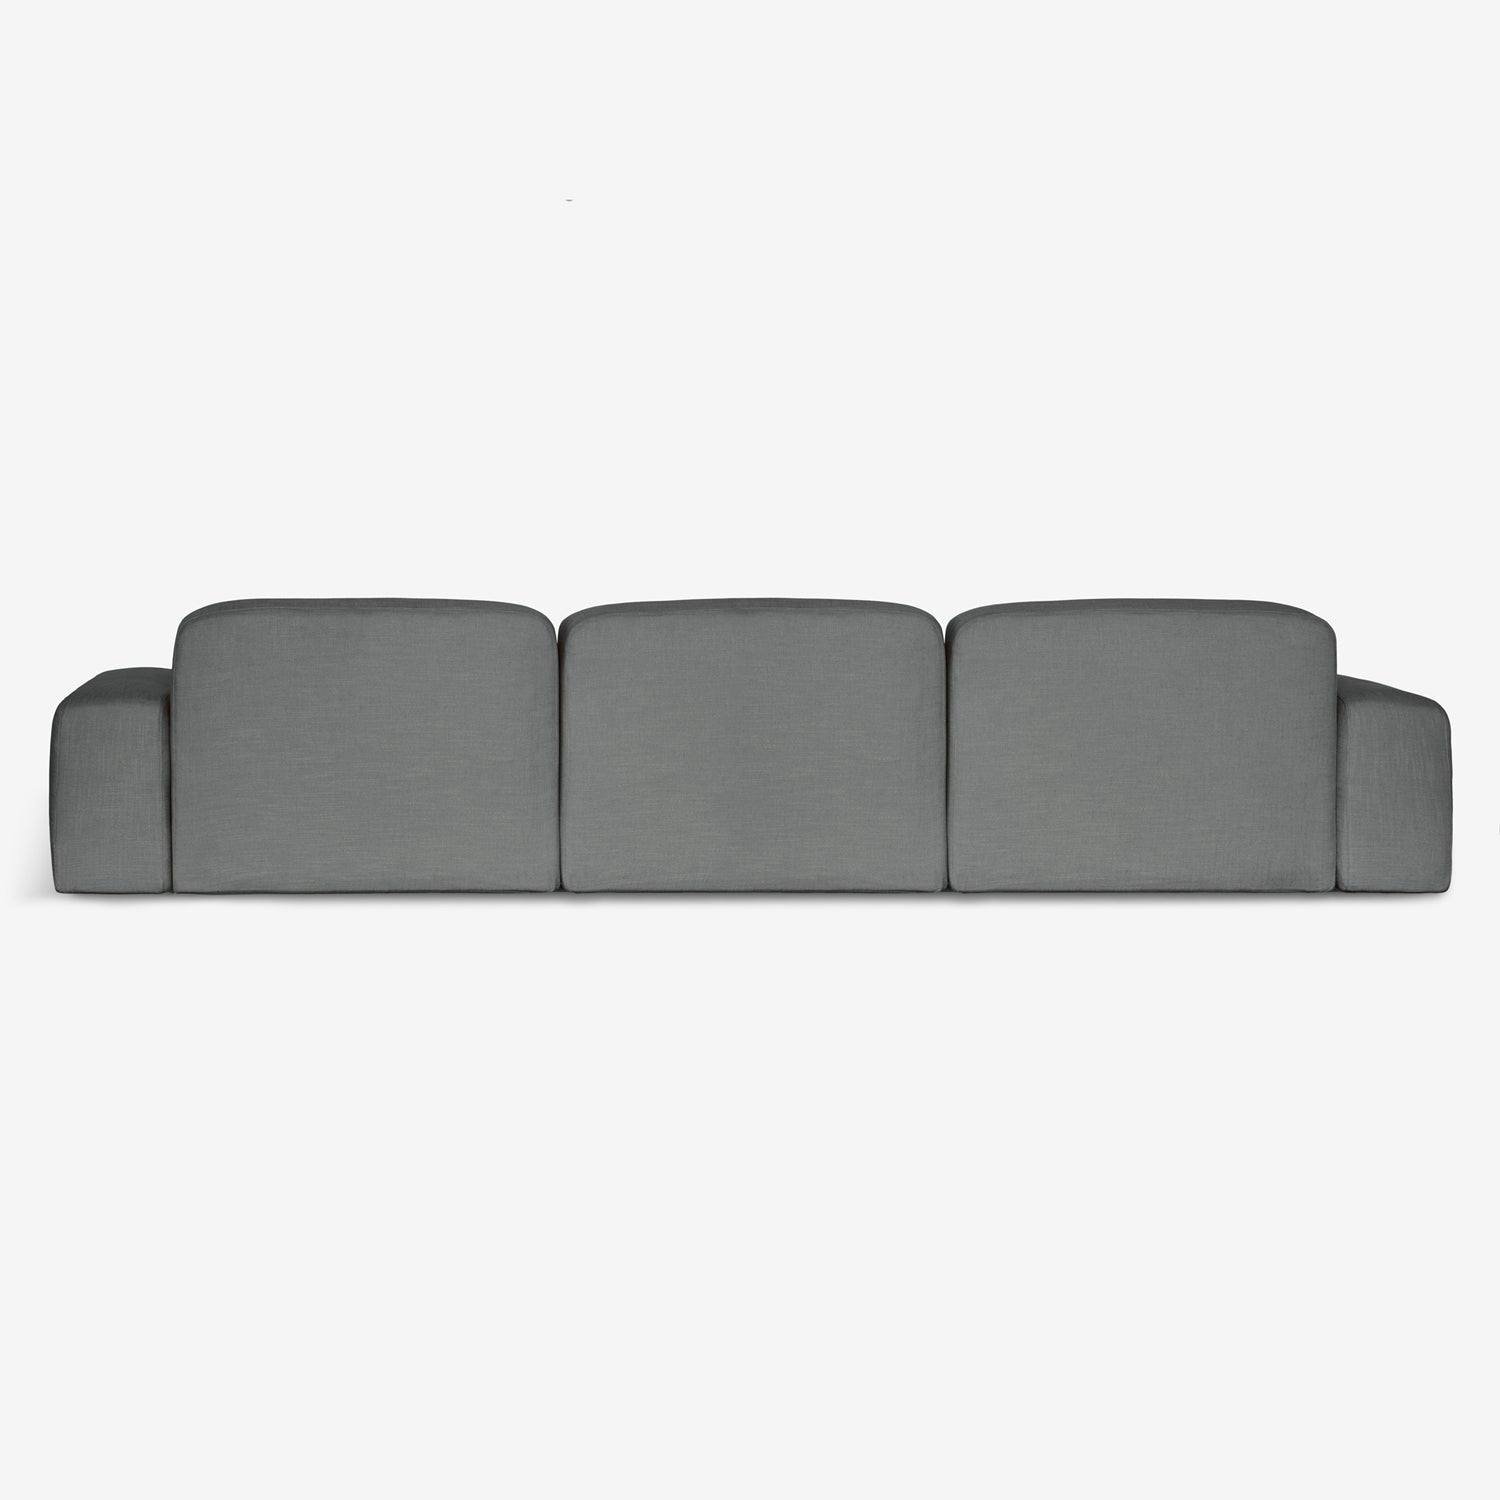 Libero grey sofa - Chic and sustainable living